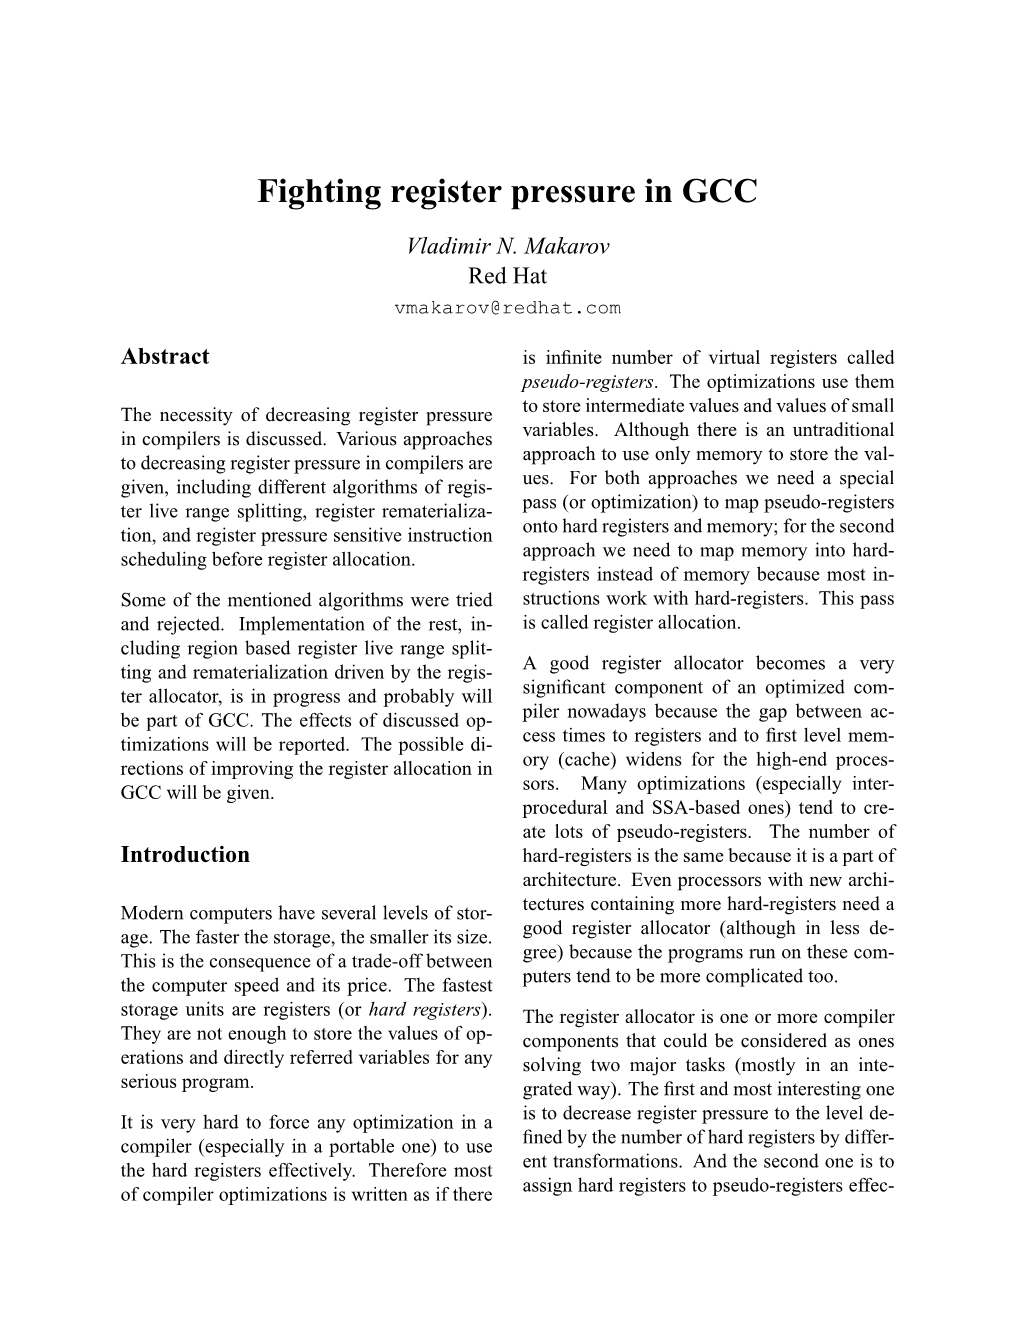 Fighting Register Pressure in GCC